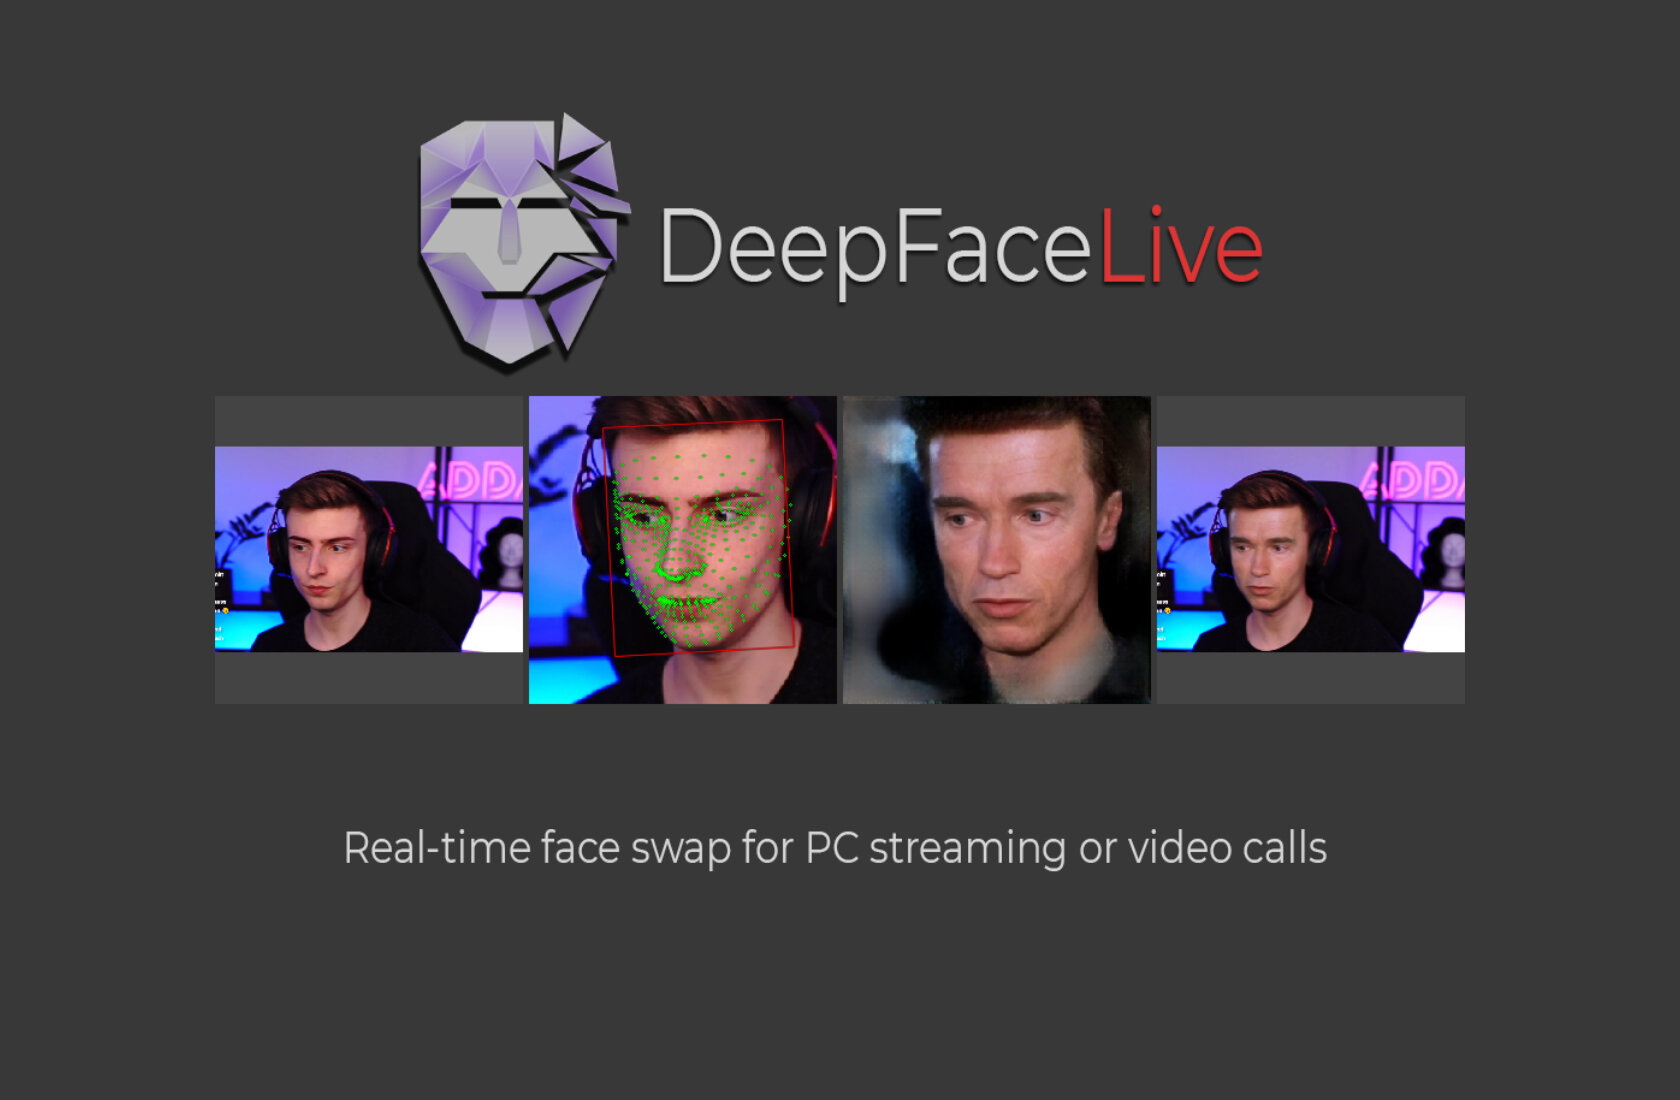 Deepface video. Замена лица на фото нейросеть. Дипфейс. Дипфейк нейросеть. Нейросеть которая заменяет лица в видео.